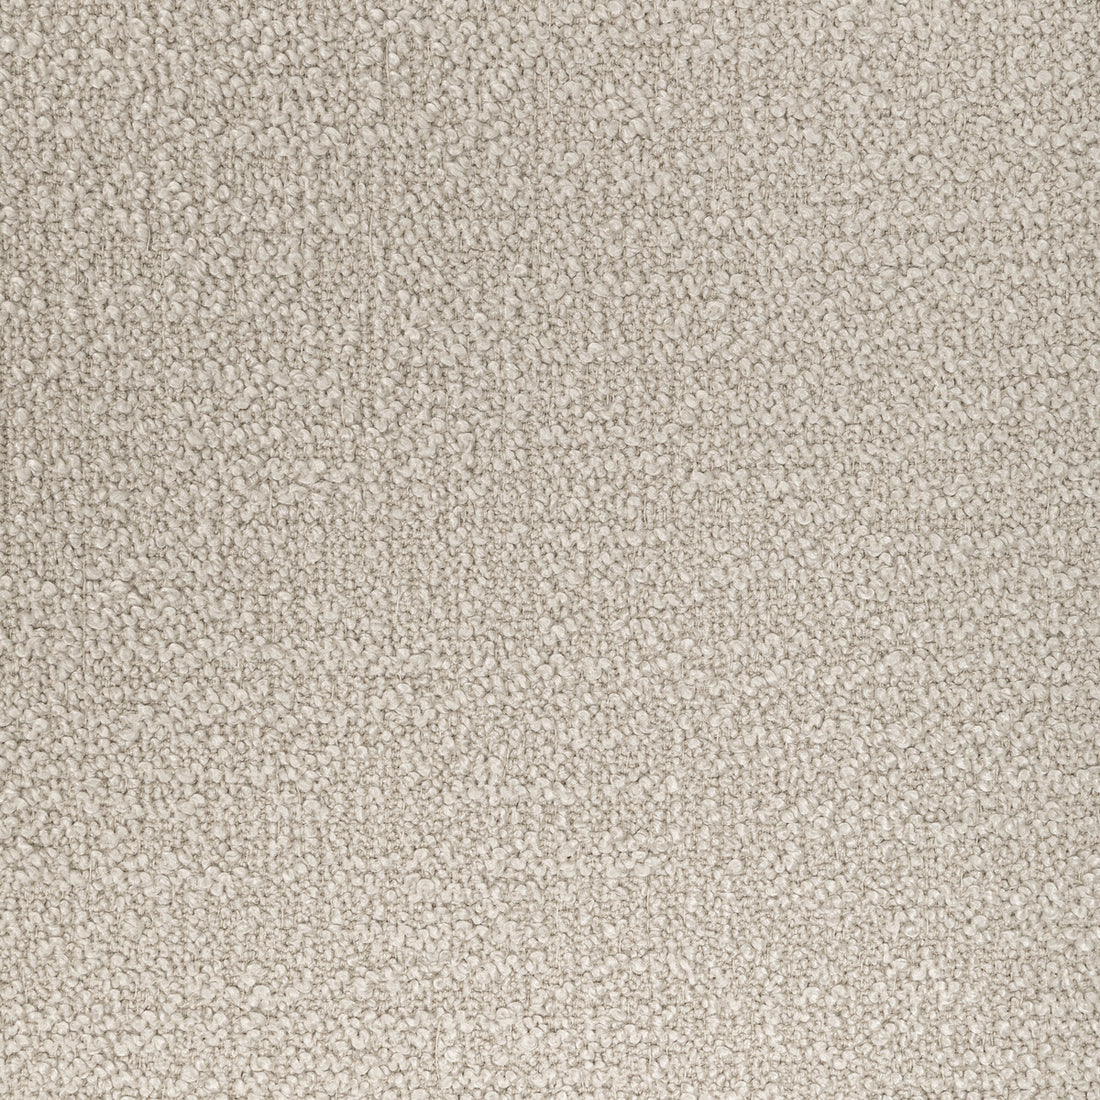 Kravet Smart fabric in 36857-11 color - pattern 36857.11.0 - by Kravet Smart in the Performance Kravetarmor collection